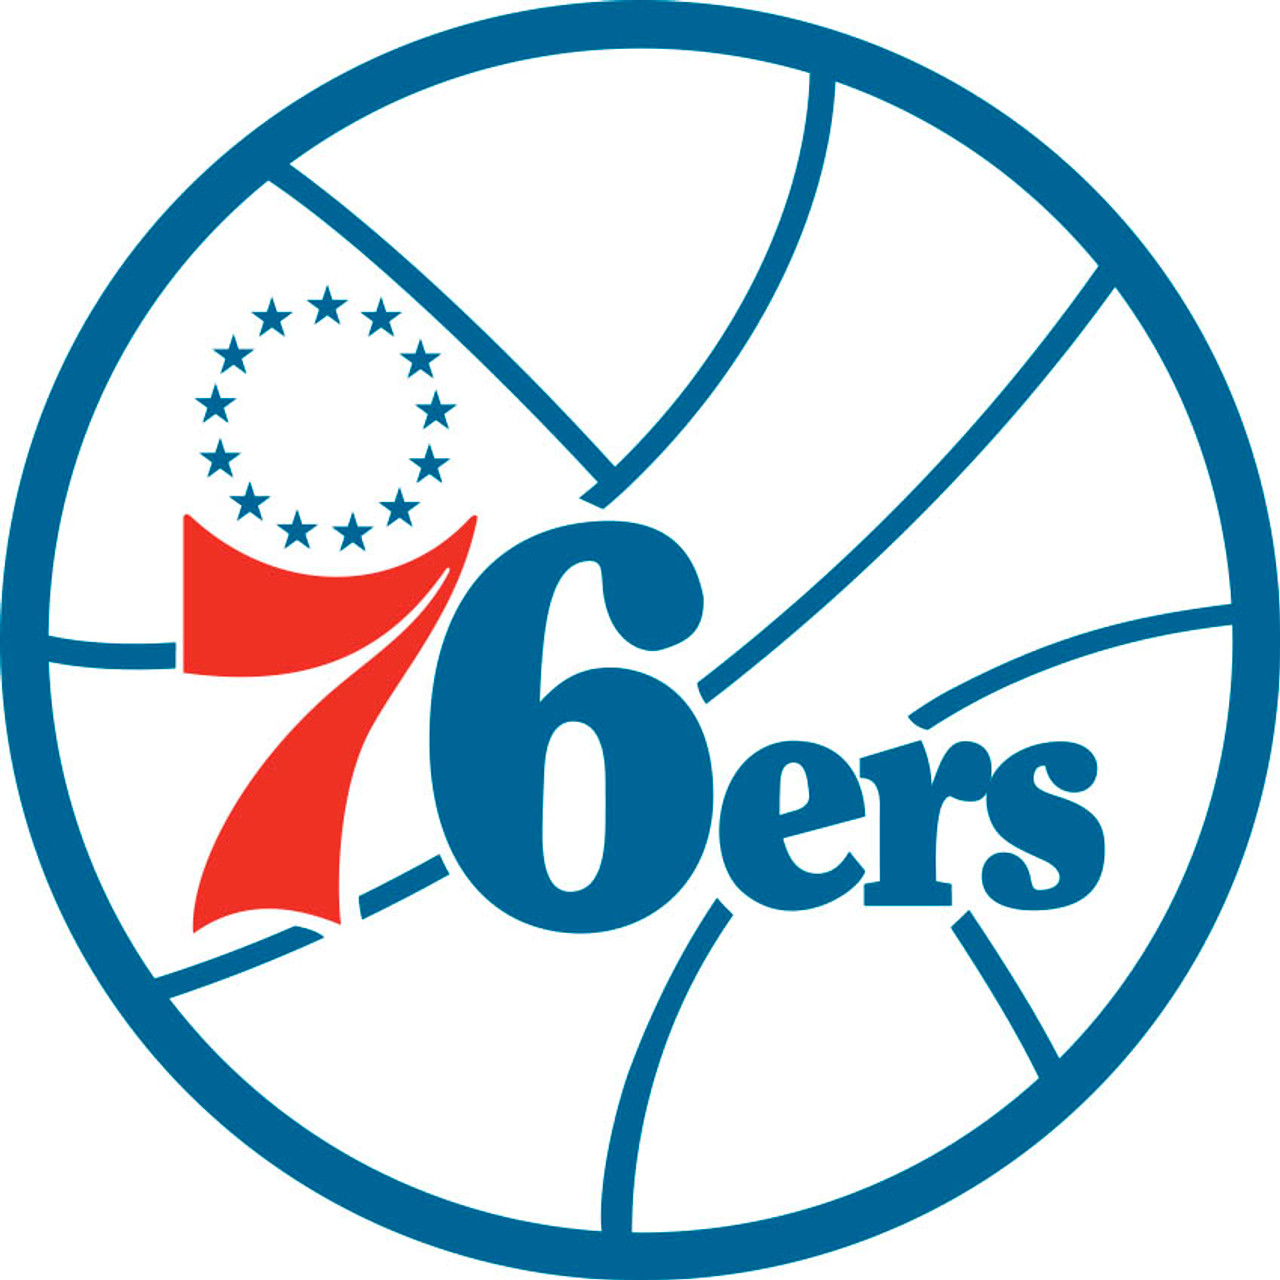 Philadelphia 76ers Round Wall Decal, NBA Basketball Sticker